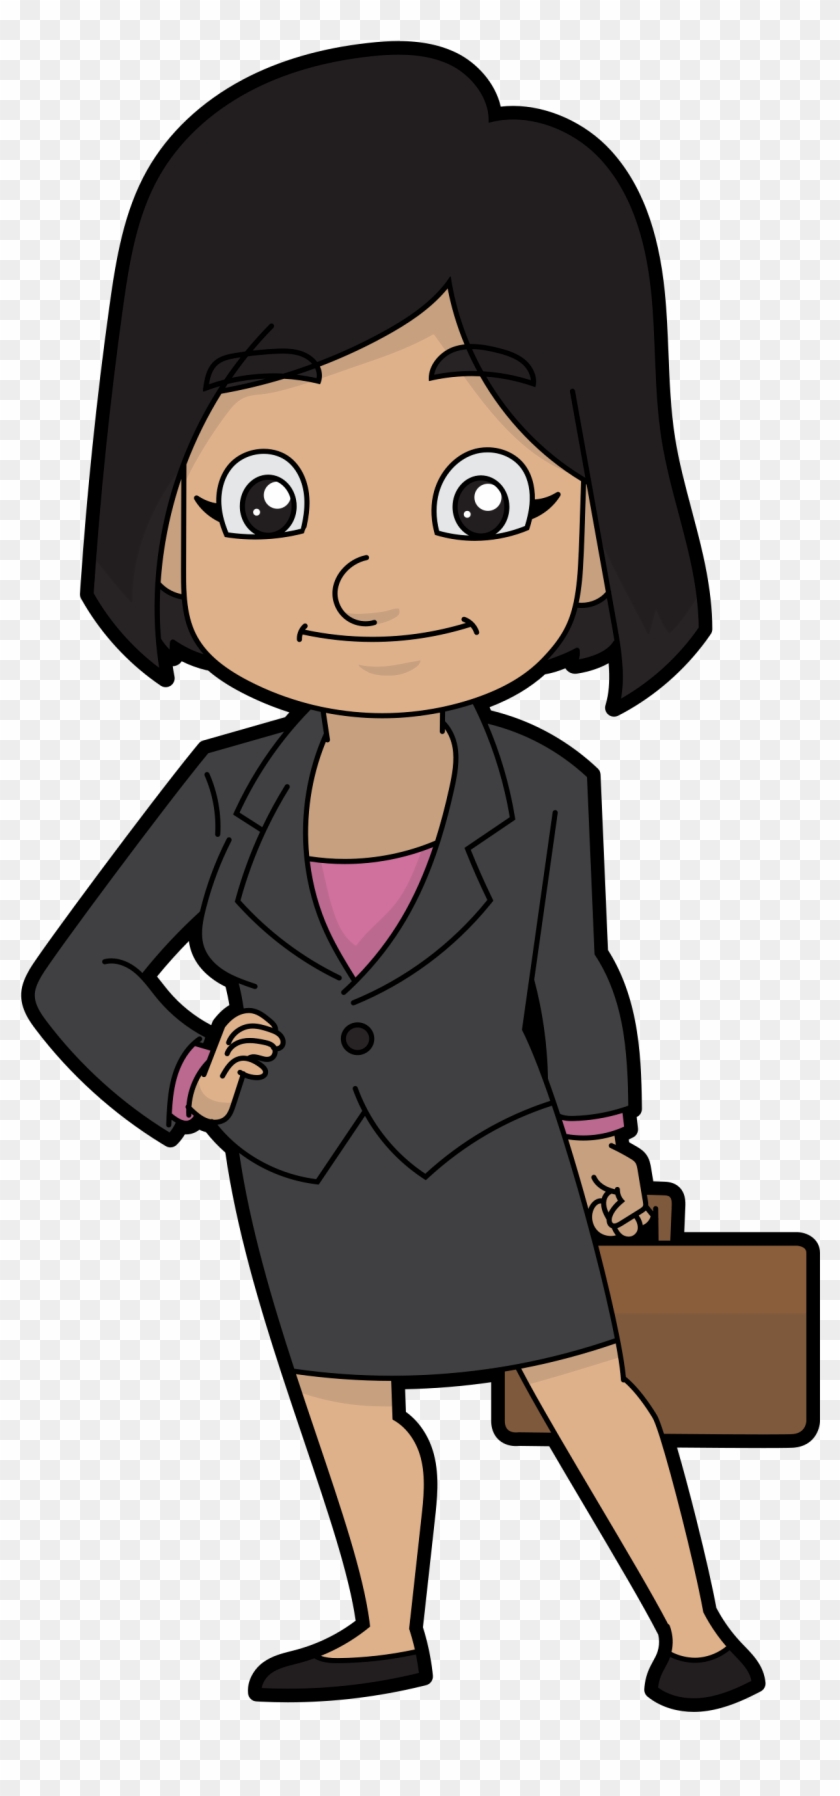 Open - Businesswoman Cartoon #737664